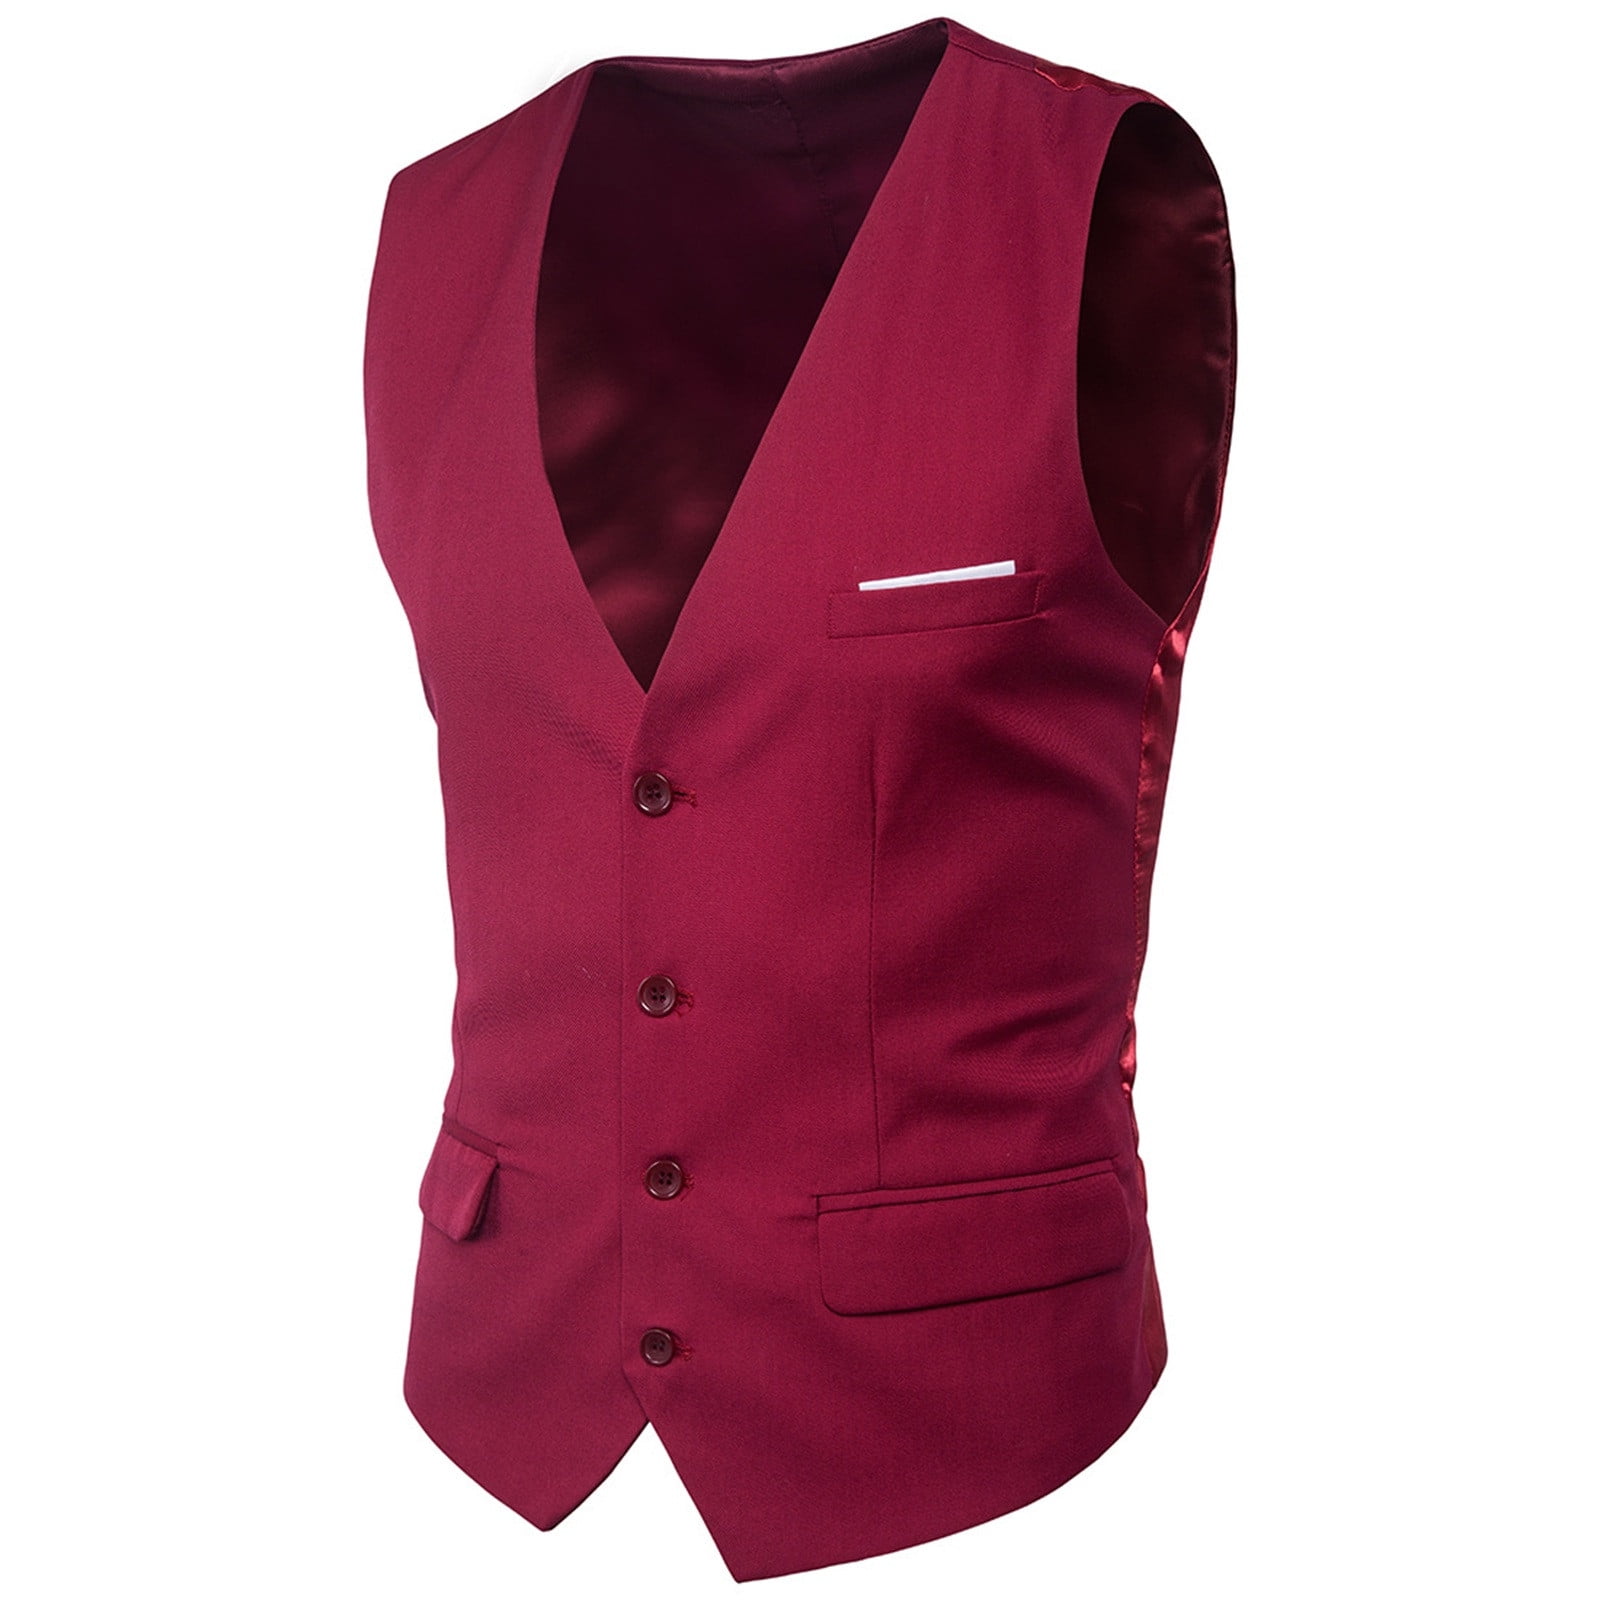 Wojeull Men's Suit Vest V Neck Silm Fit Solid Formal Suit Waist Coat ...